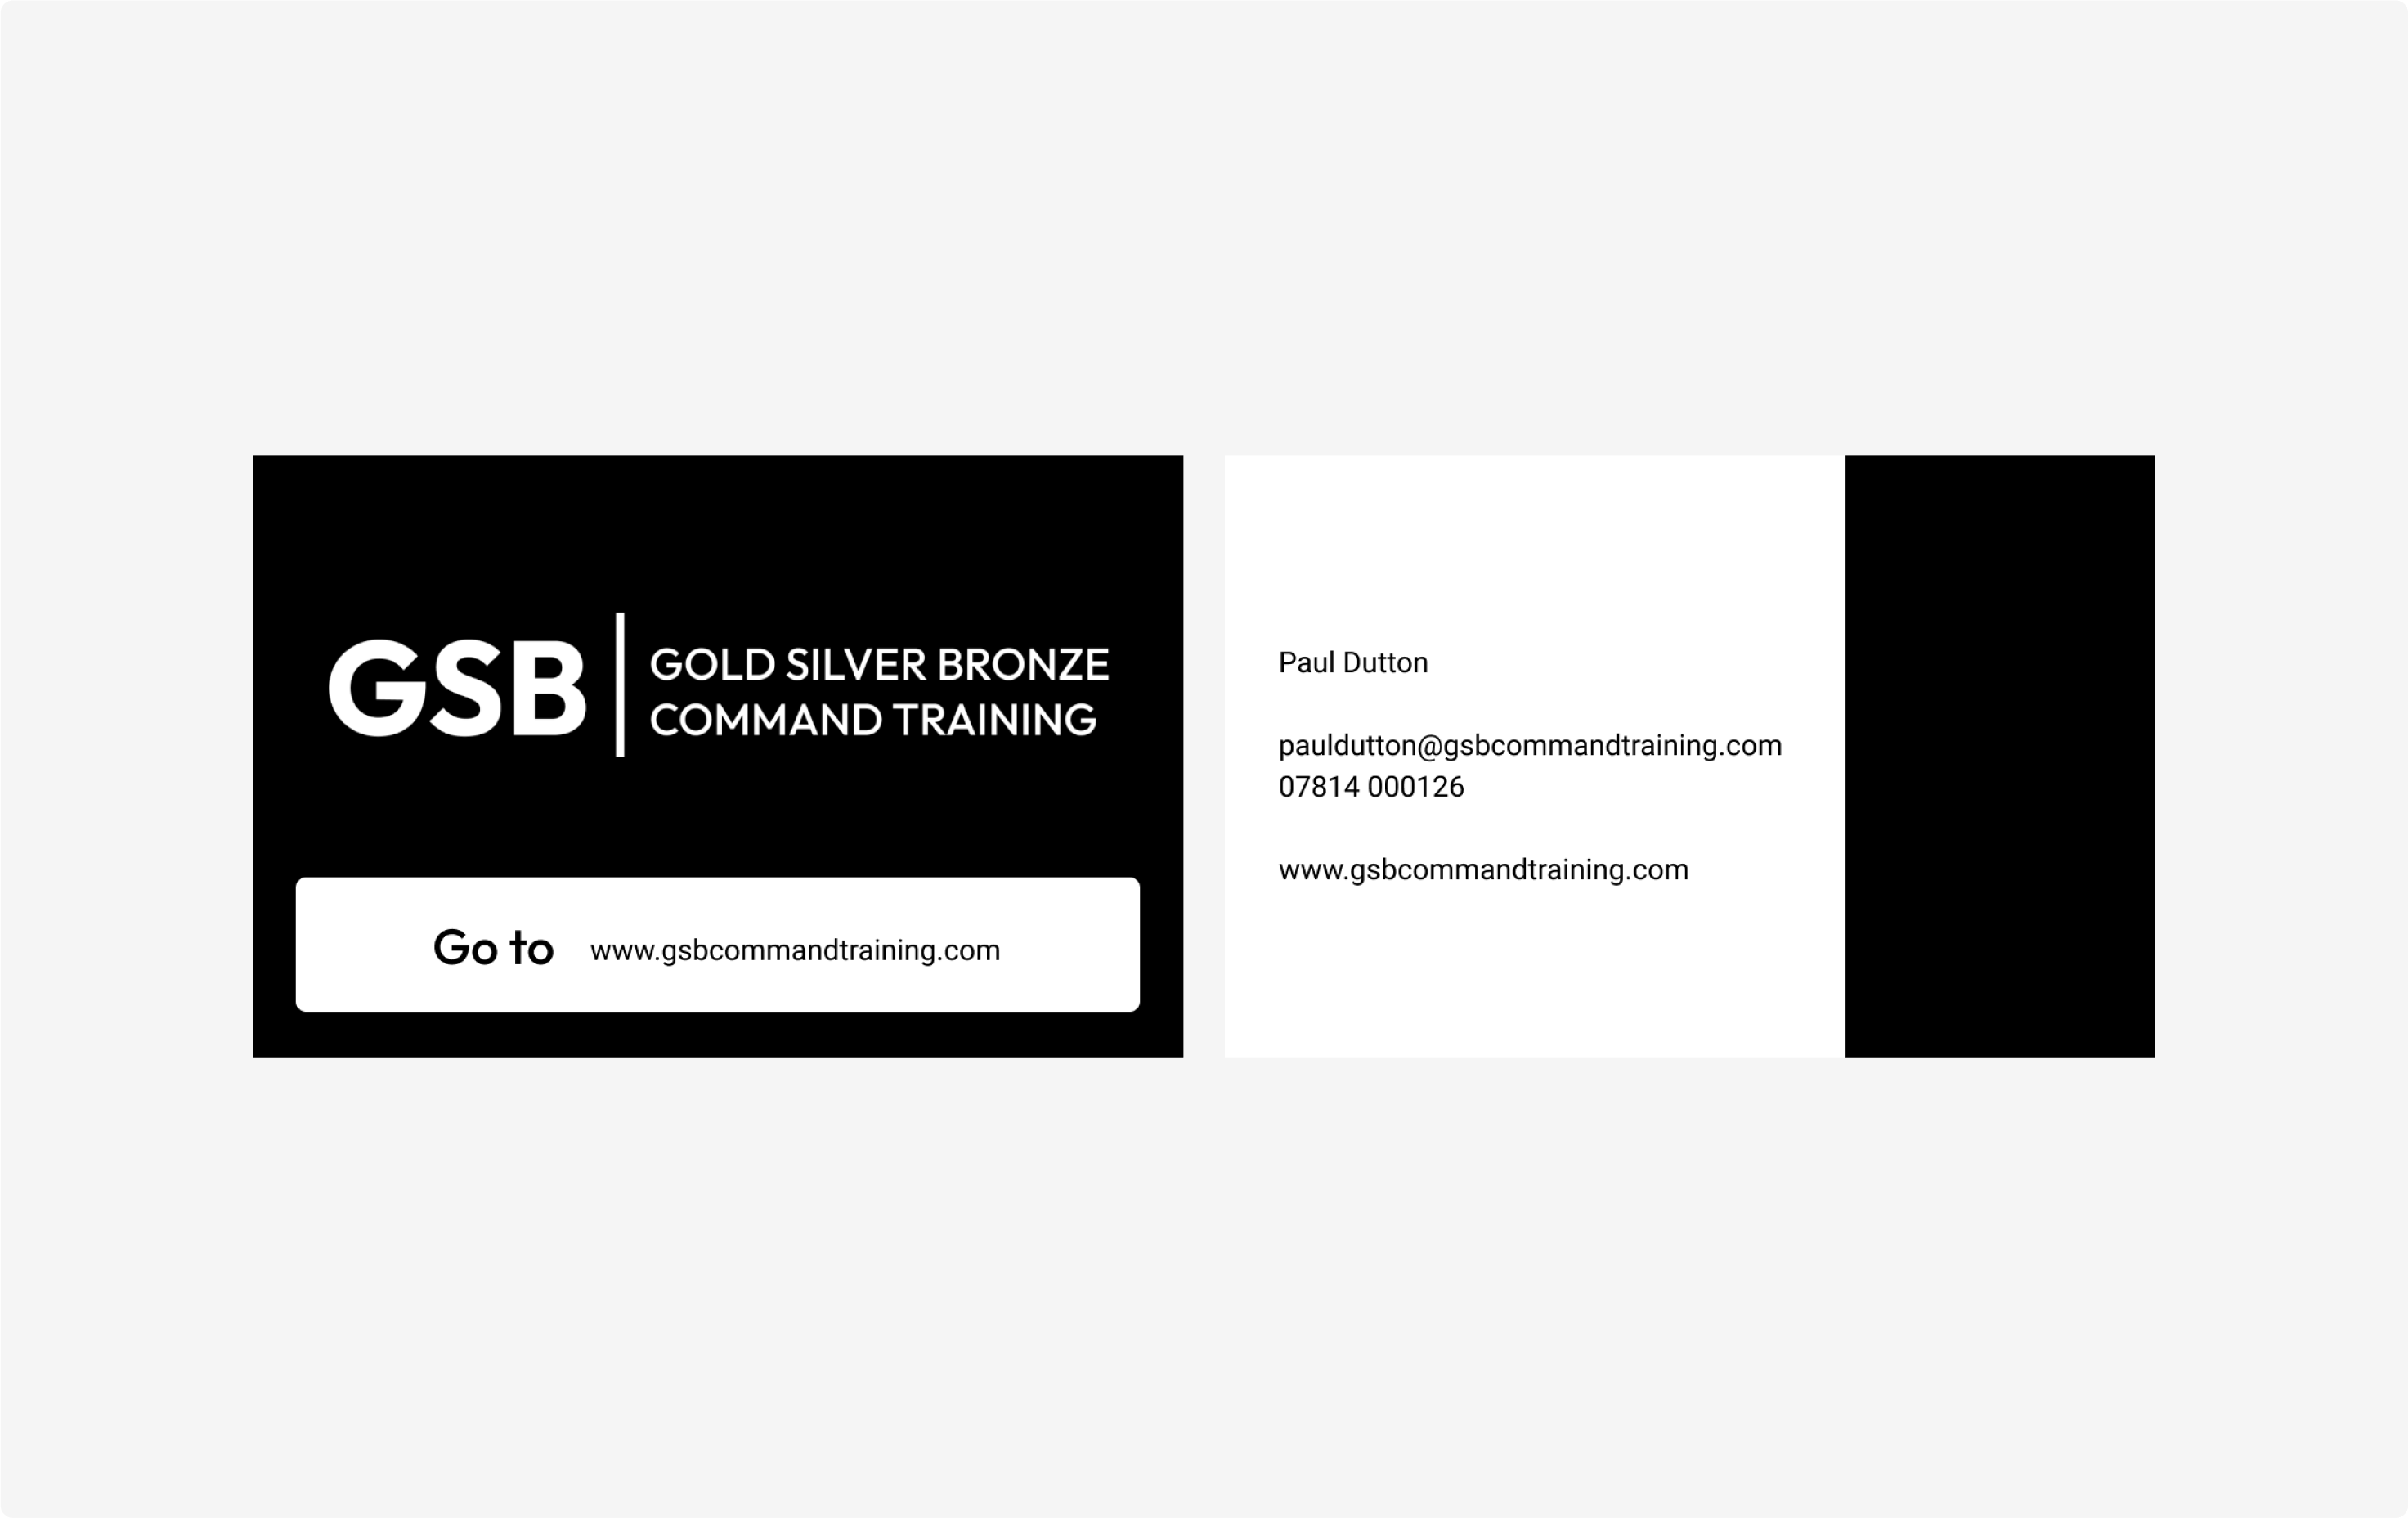 GSB business card designs.